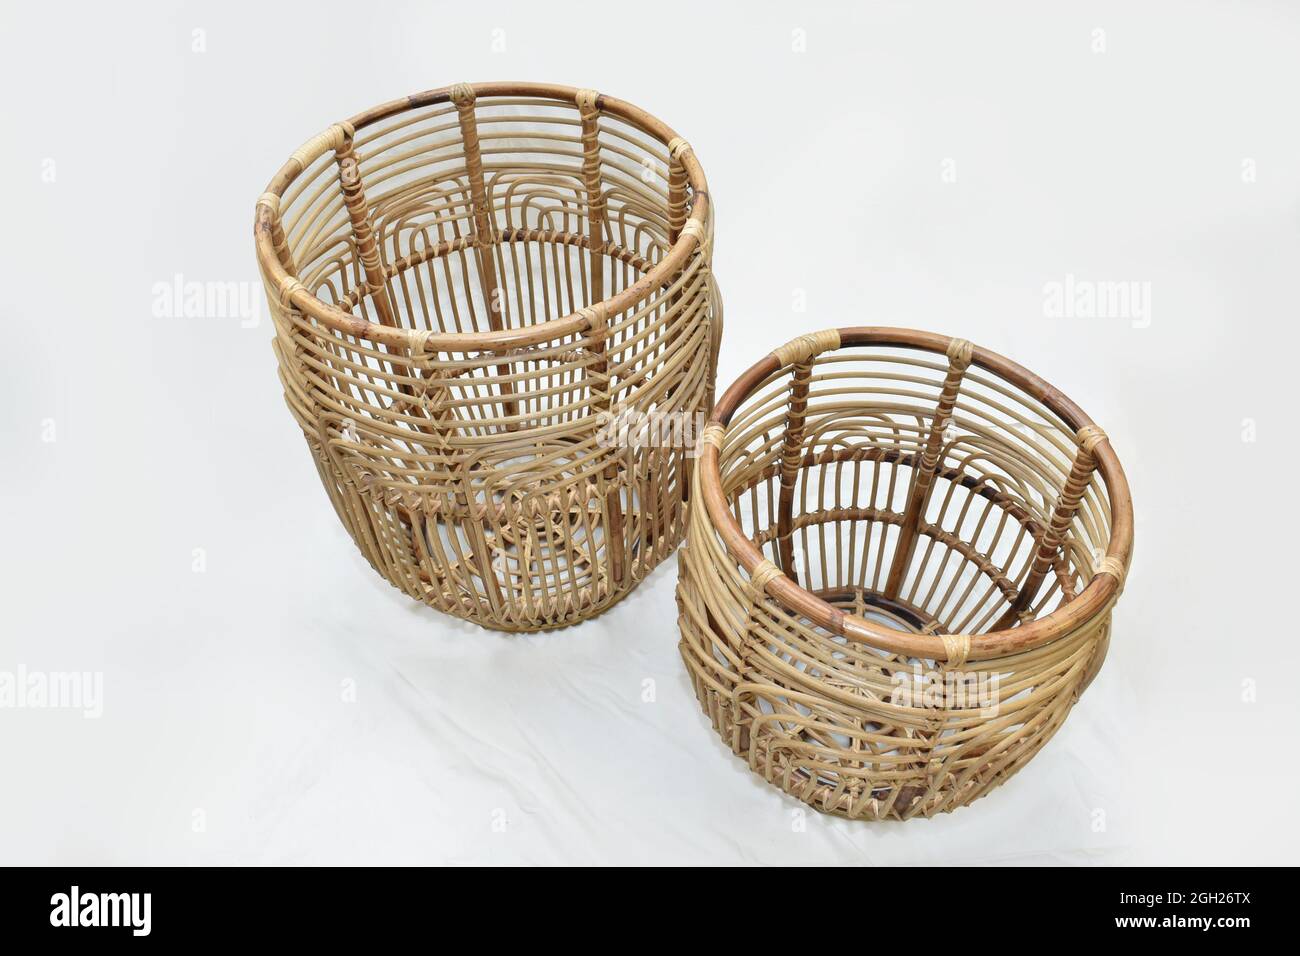 cane rattan Landry round basket set on white background selective soft focus Stock Photo